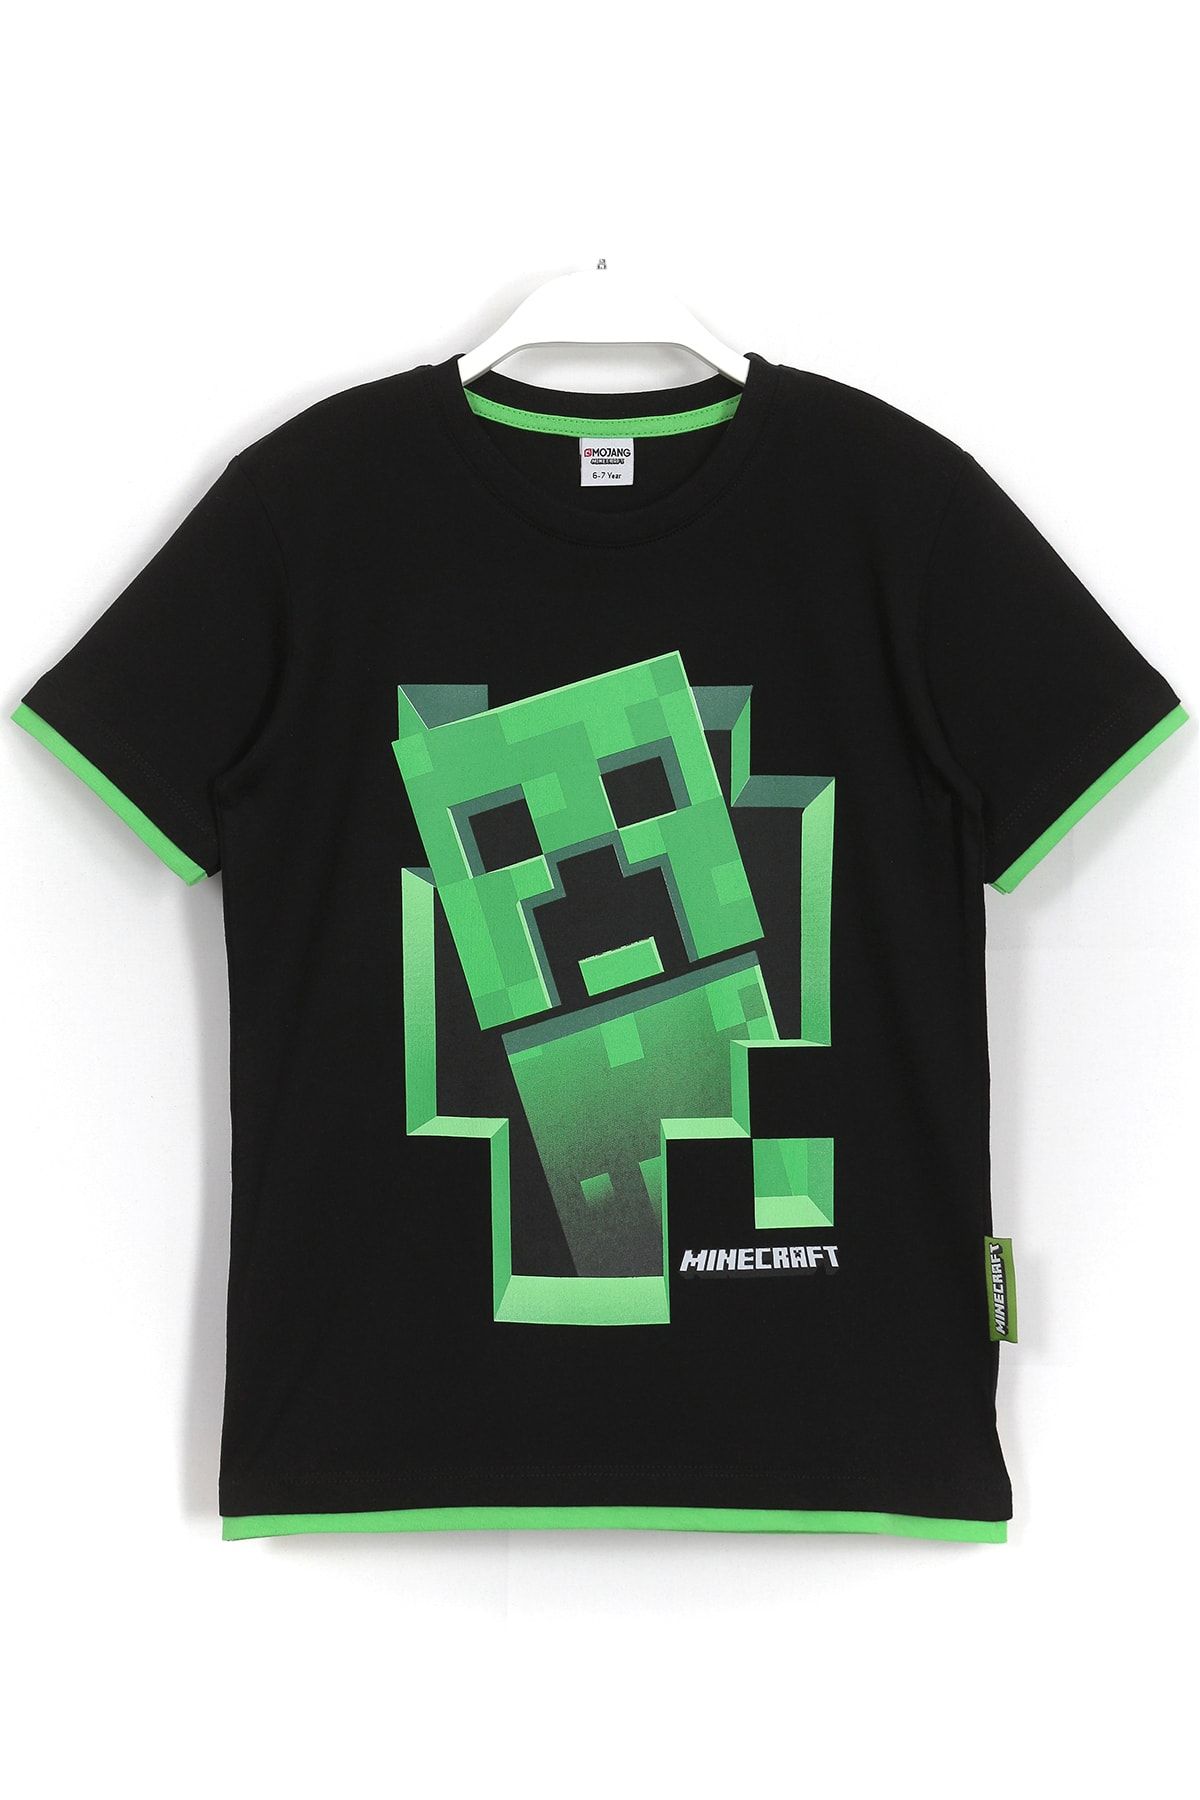 DobaKids Minecraft Creeper 3d Baskılı Biye Detaylı Erkek Çocuk T-shirt Siyah